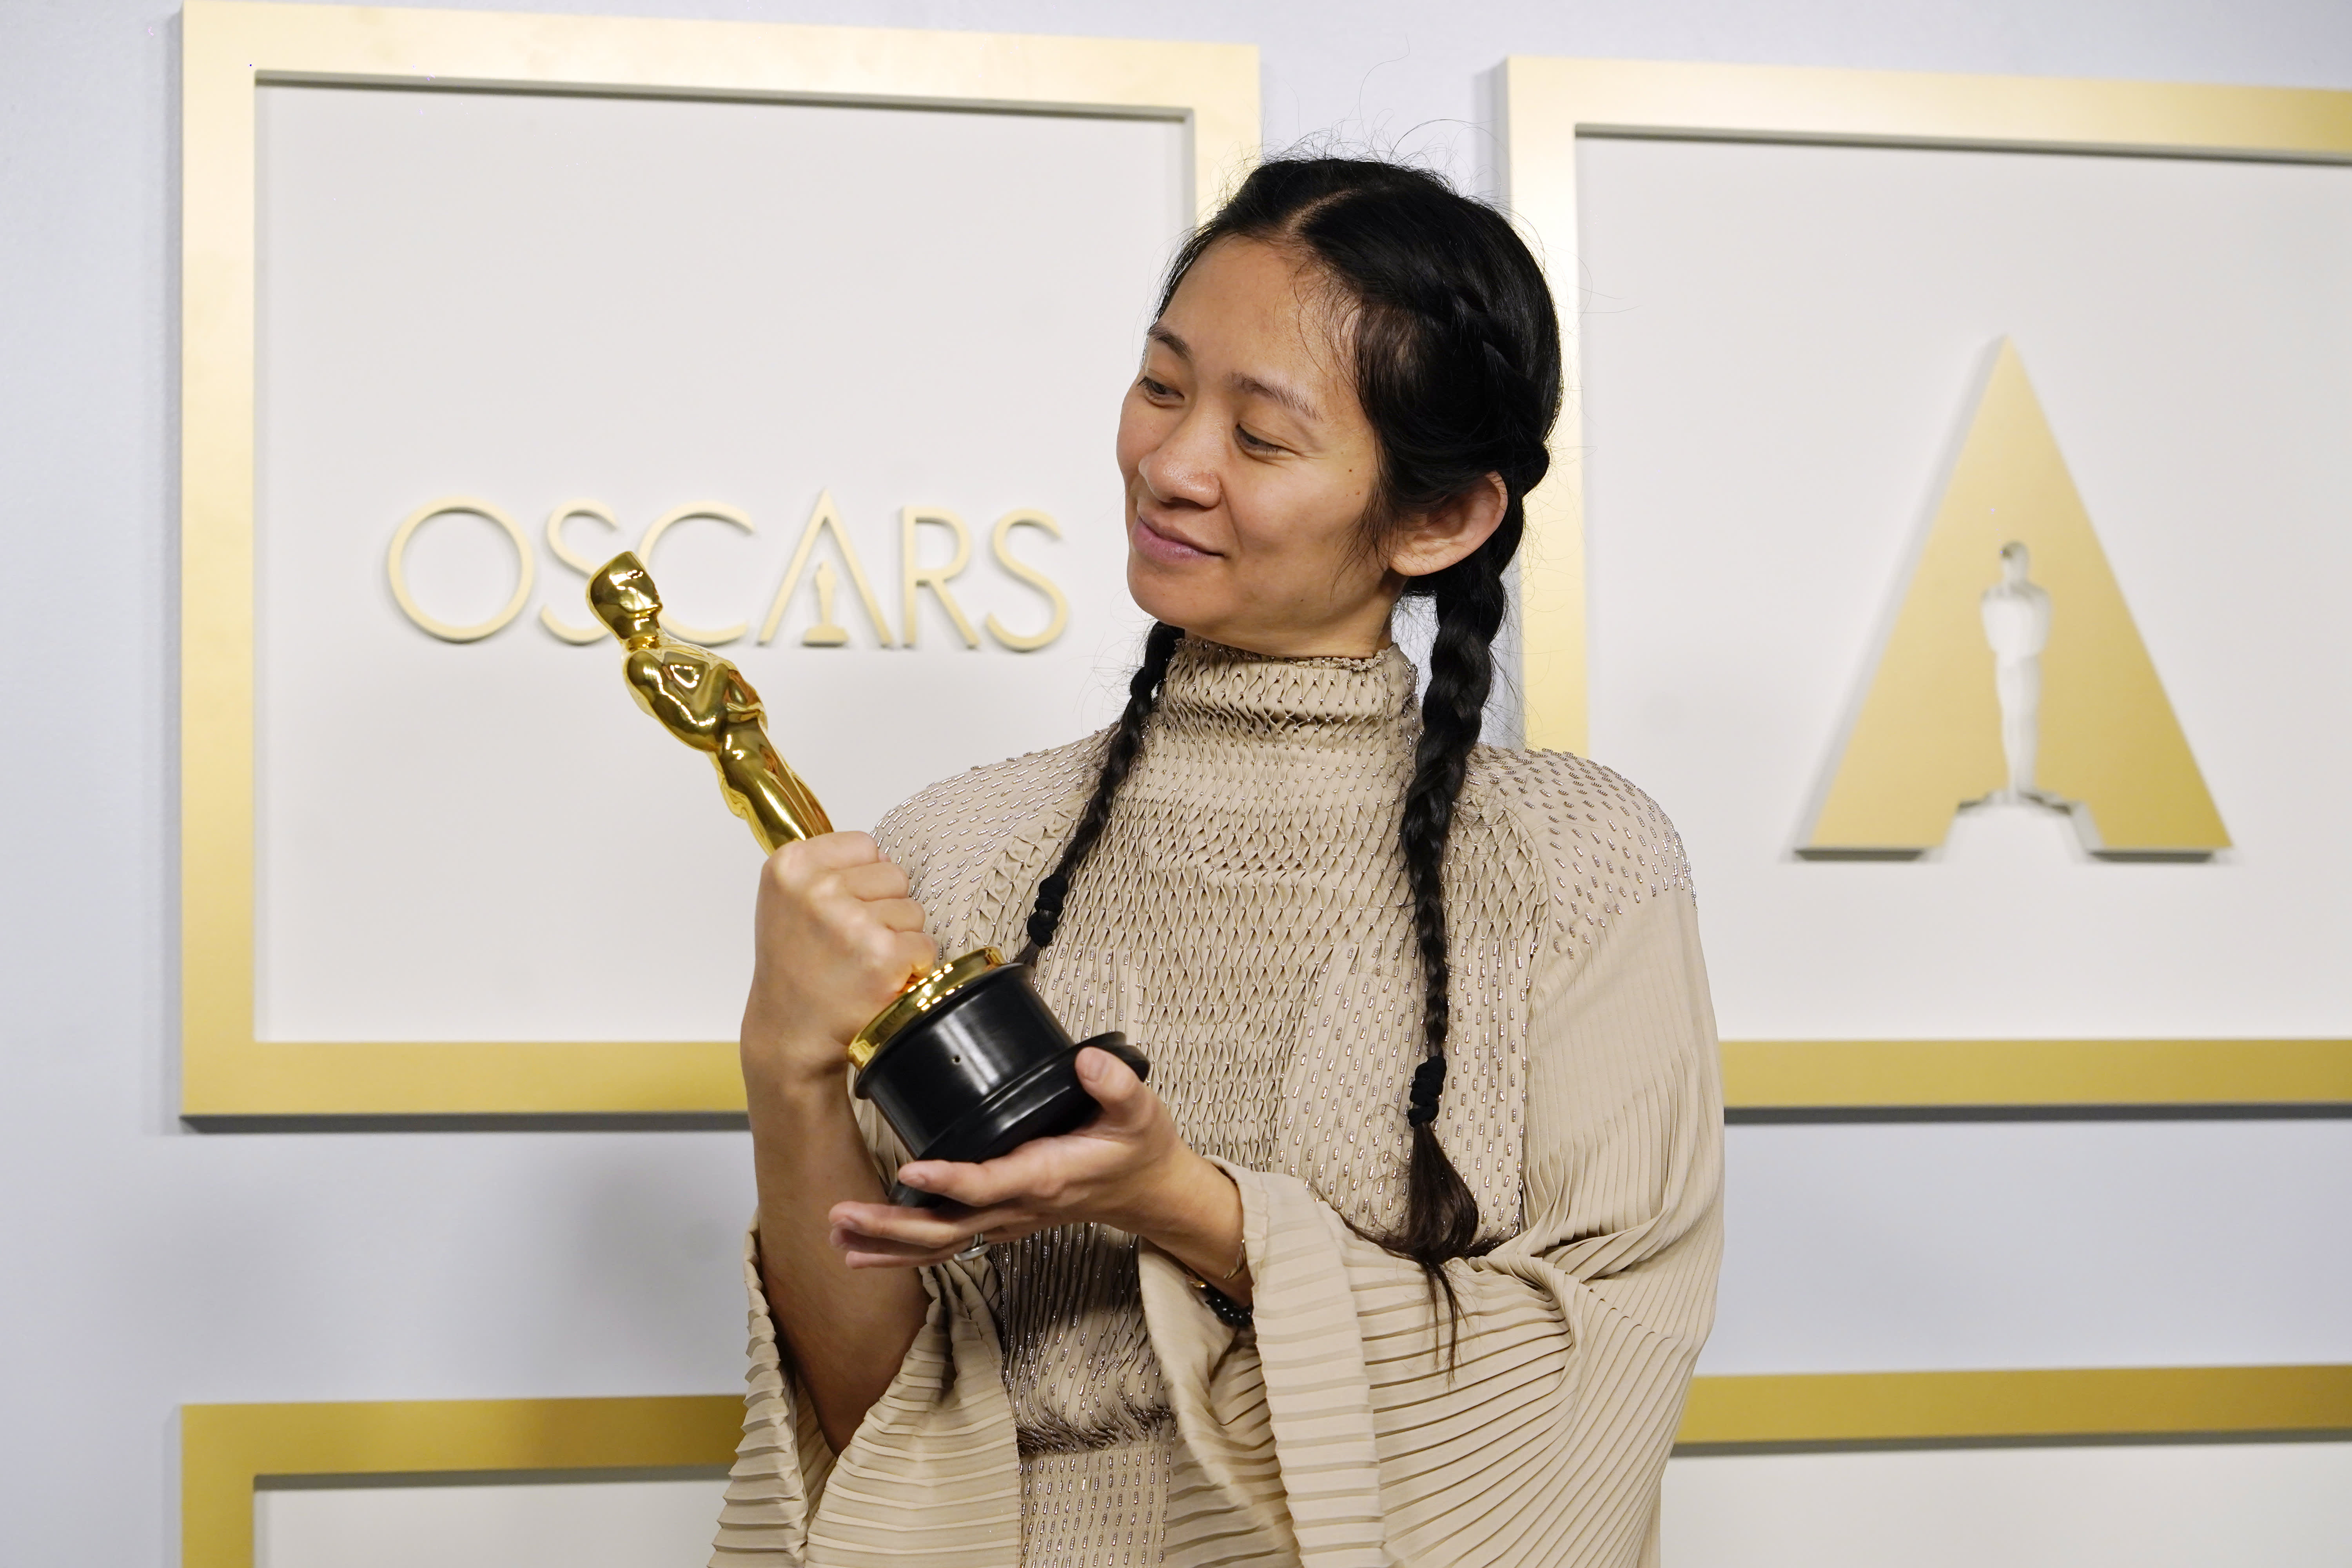 Oscars 2021 winners: Here's who took home trophies